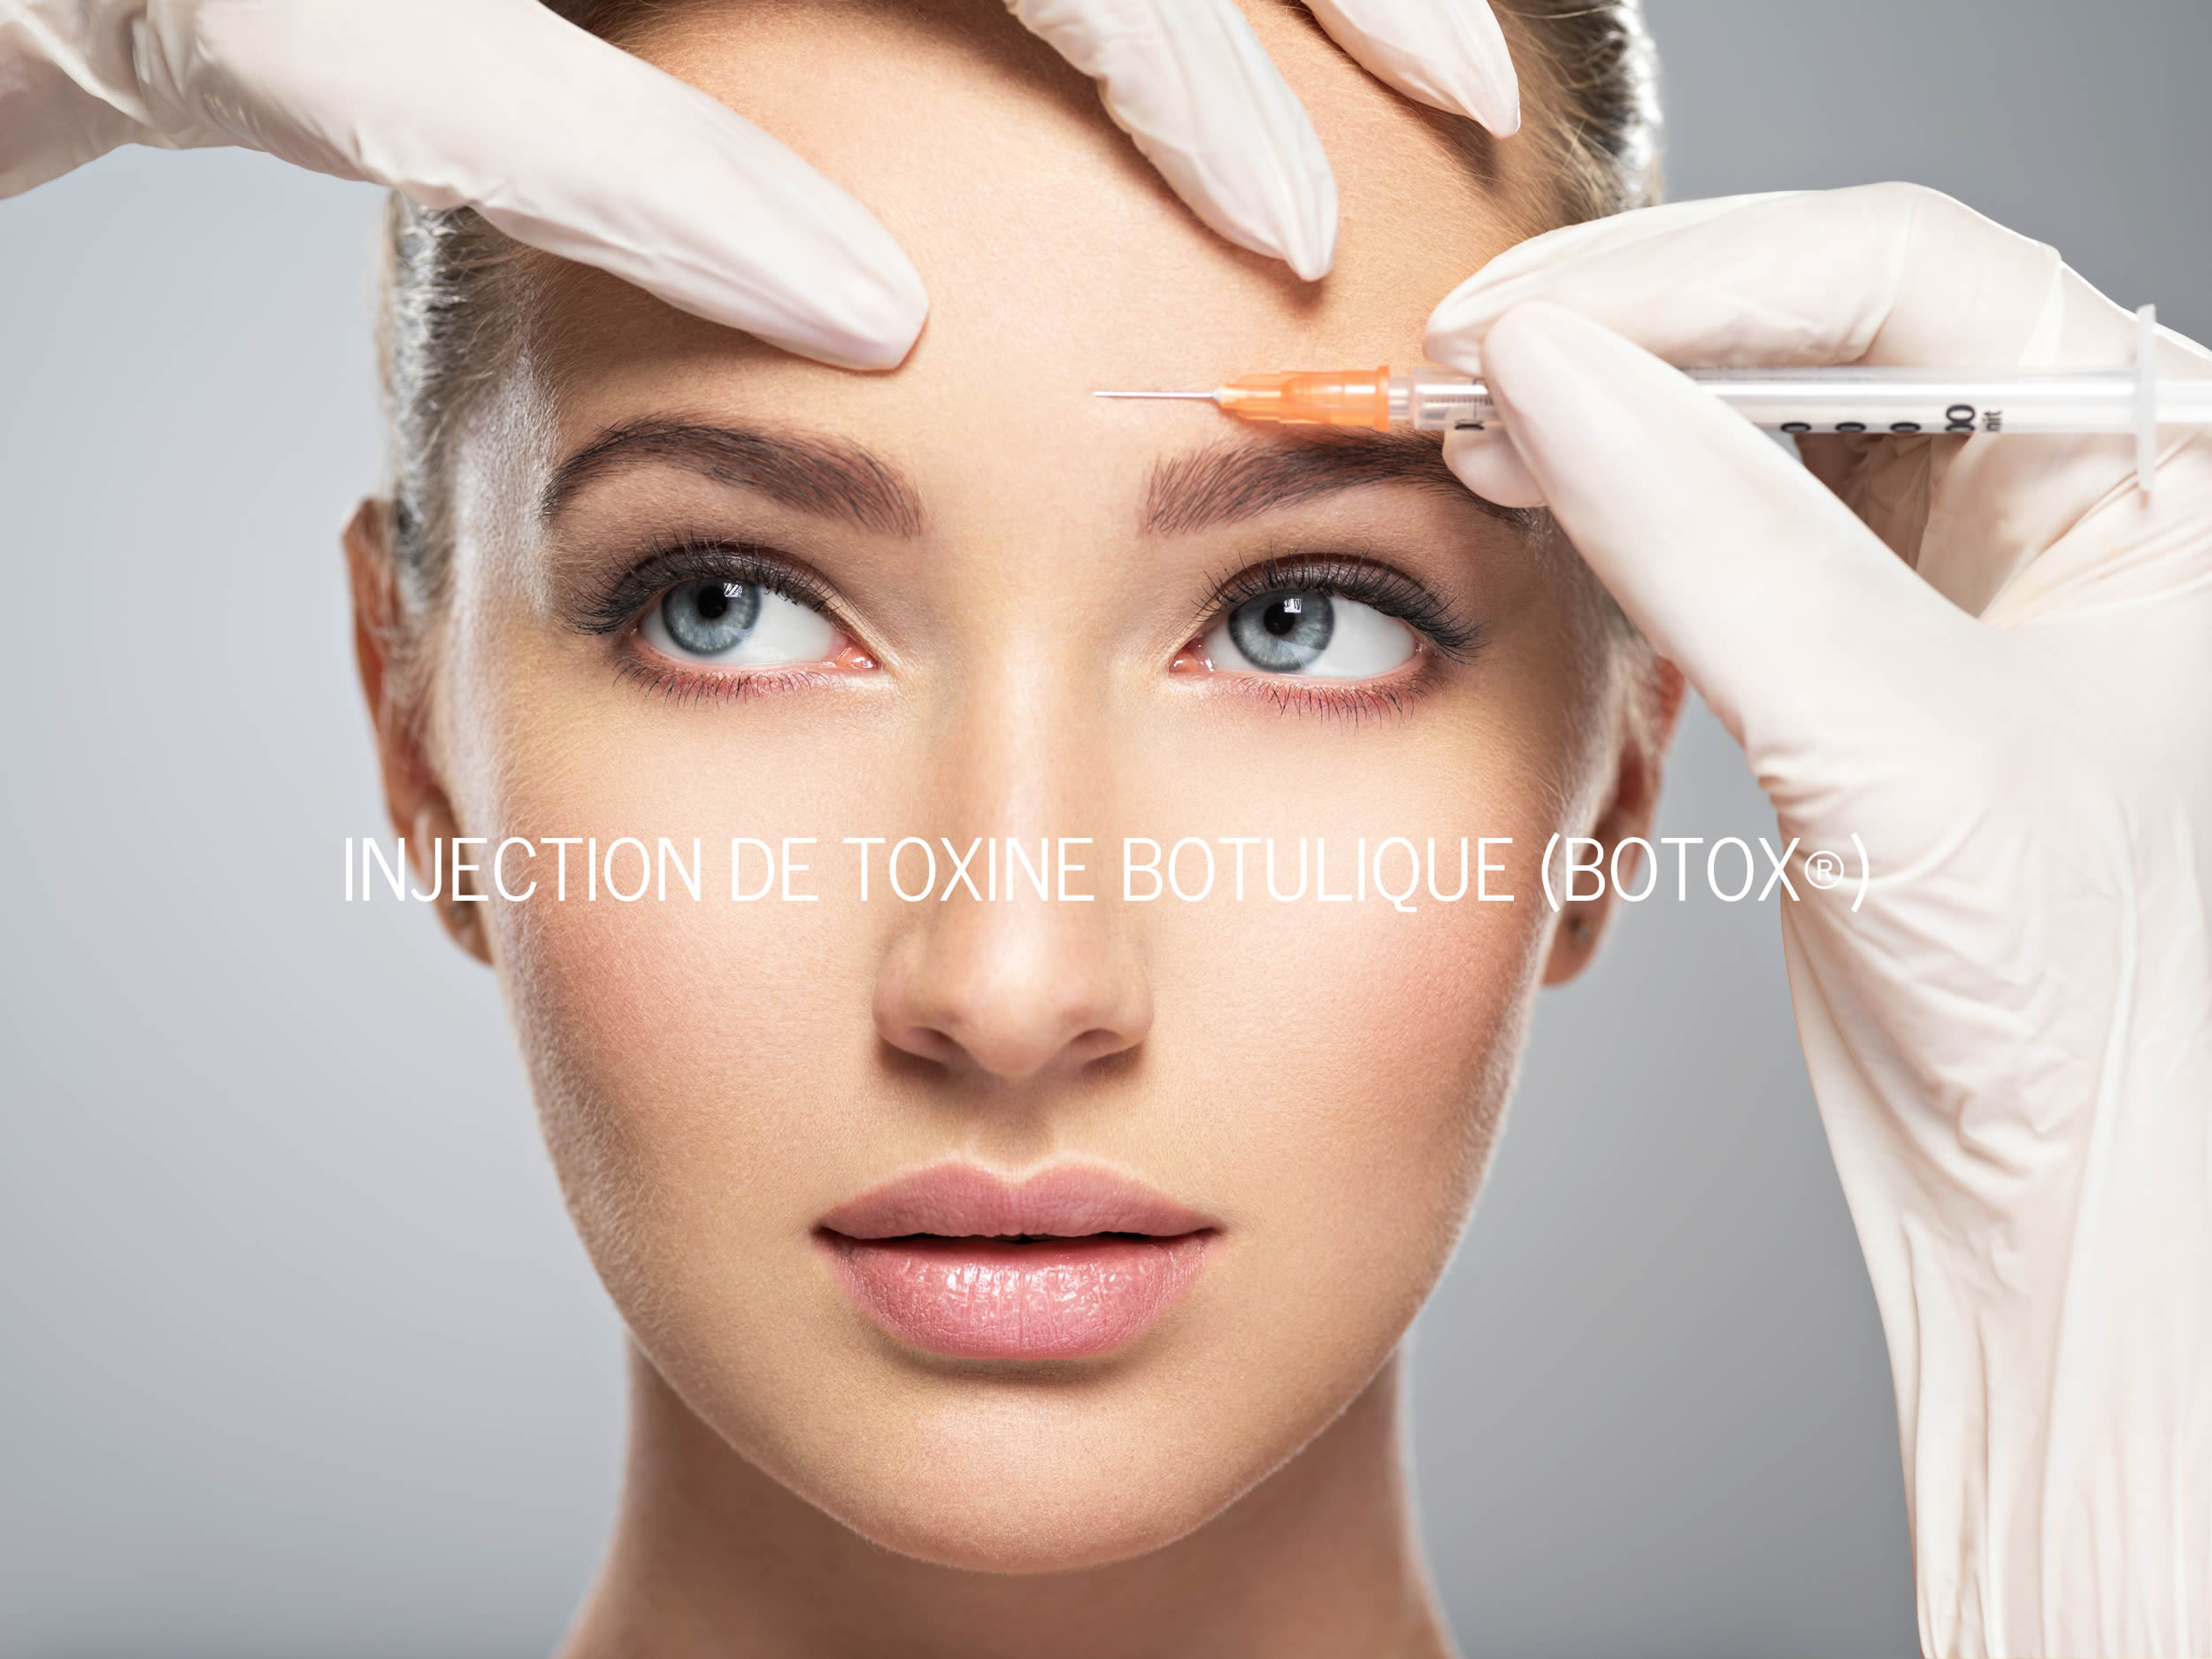 Injection de toxine botulique - Botox